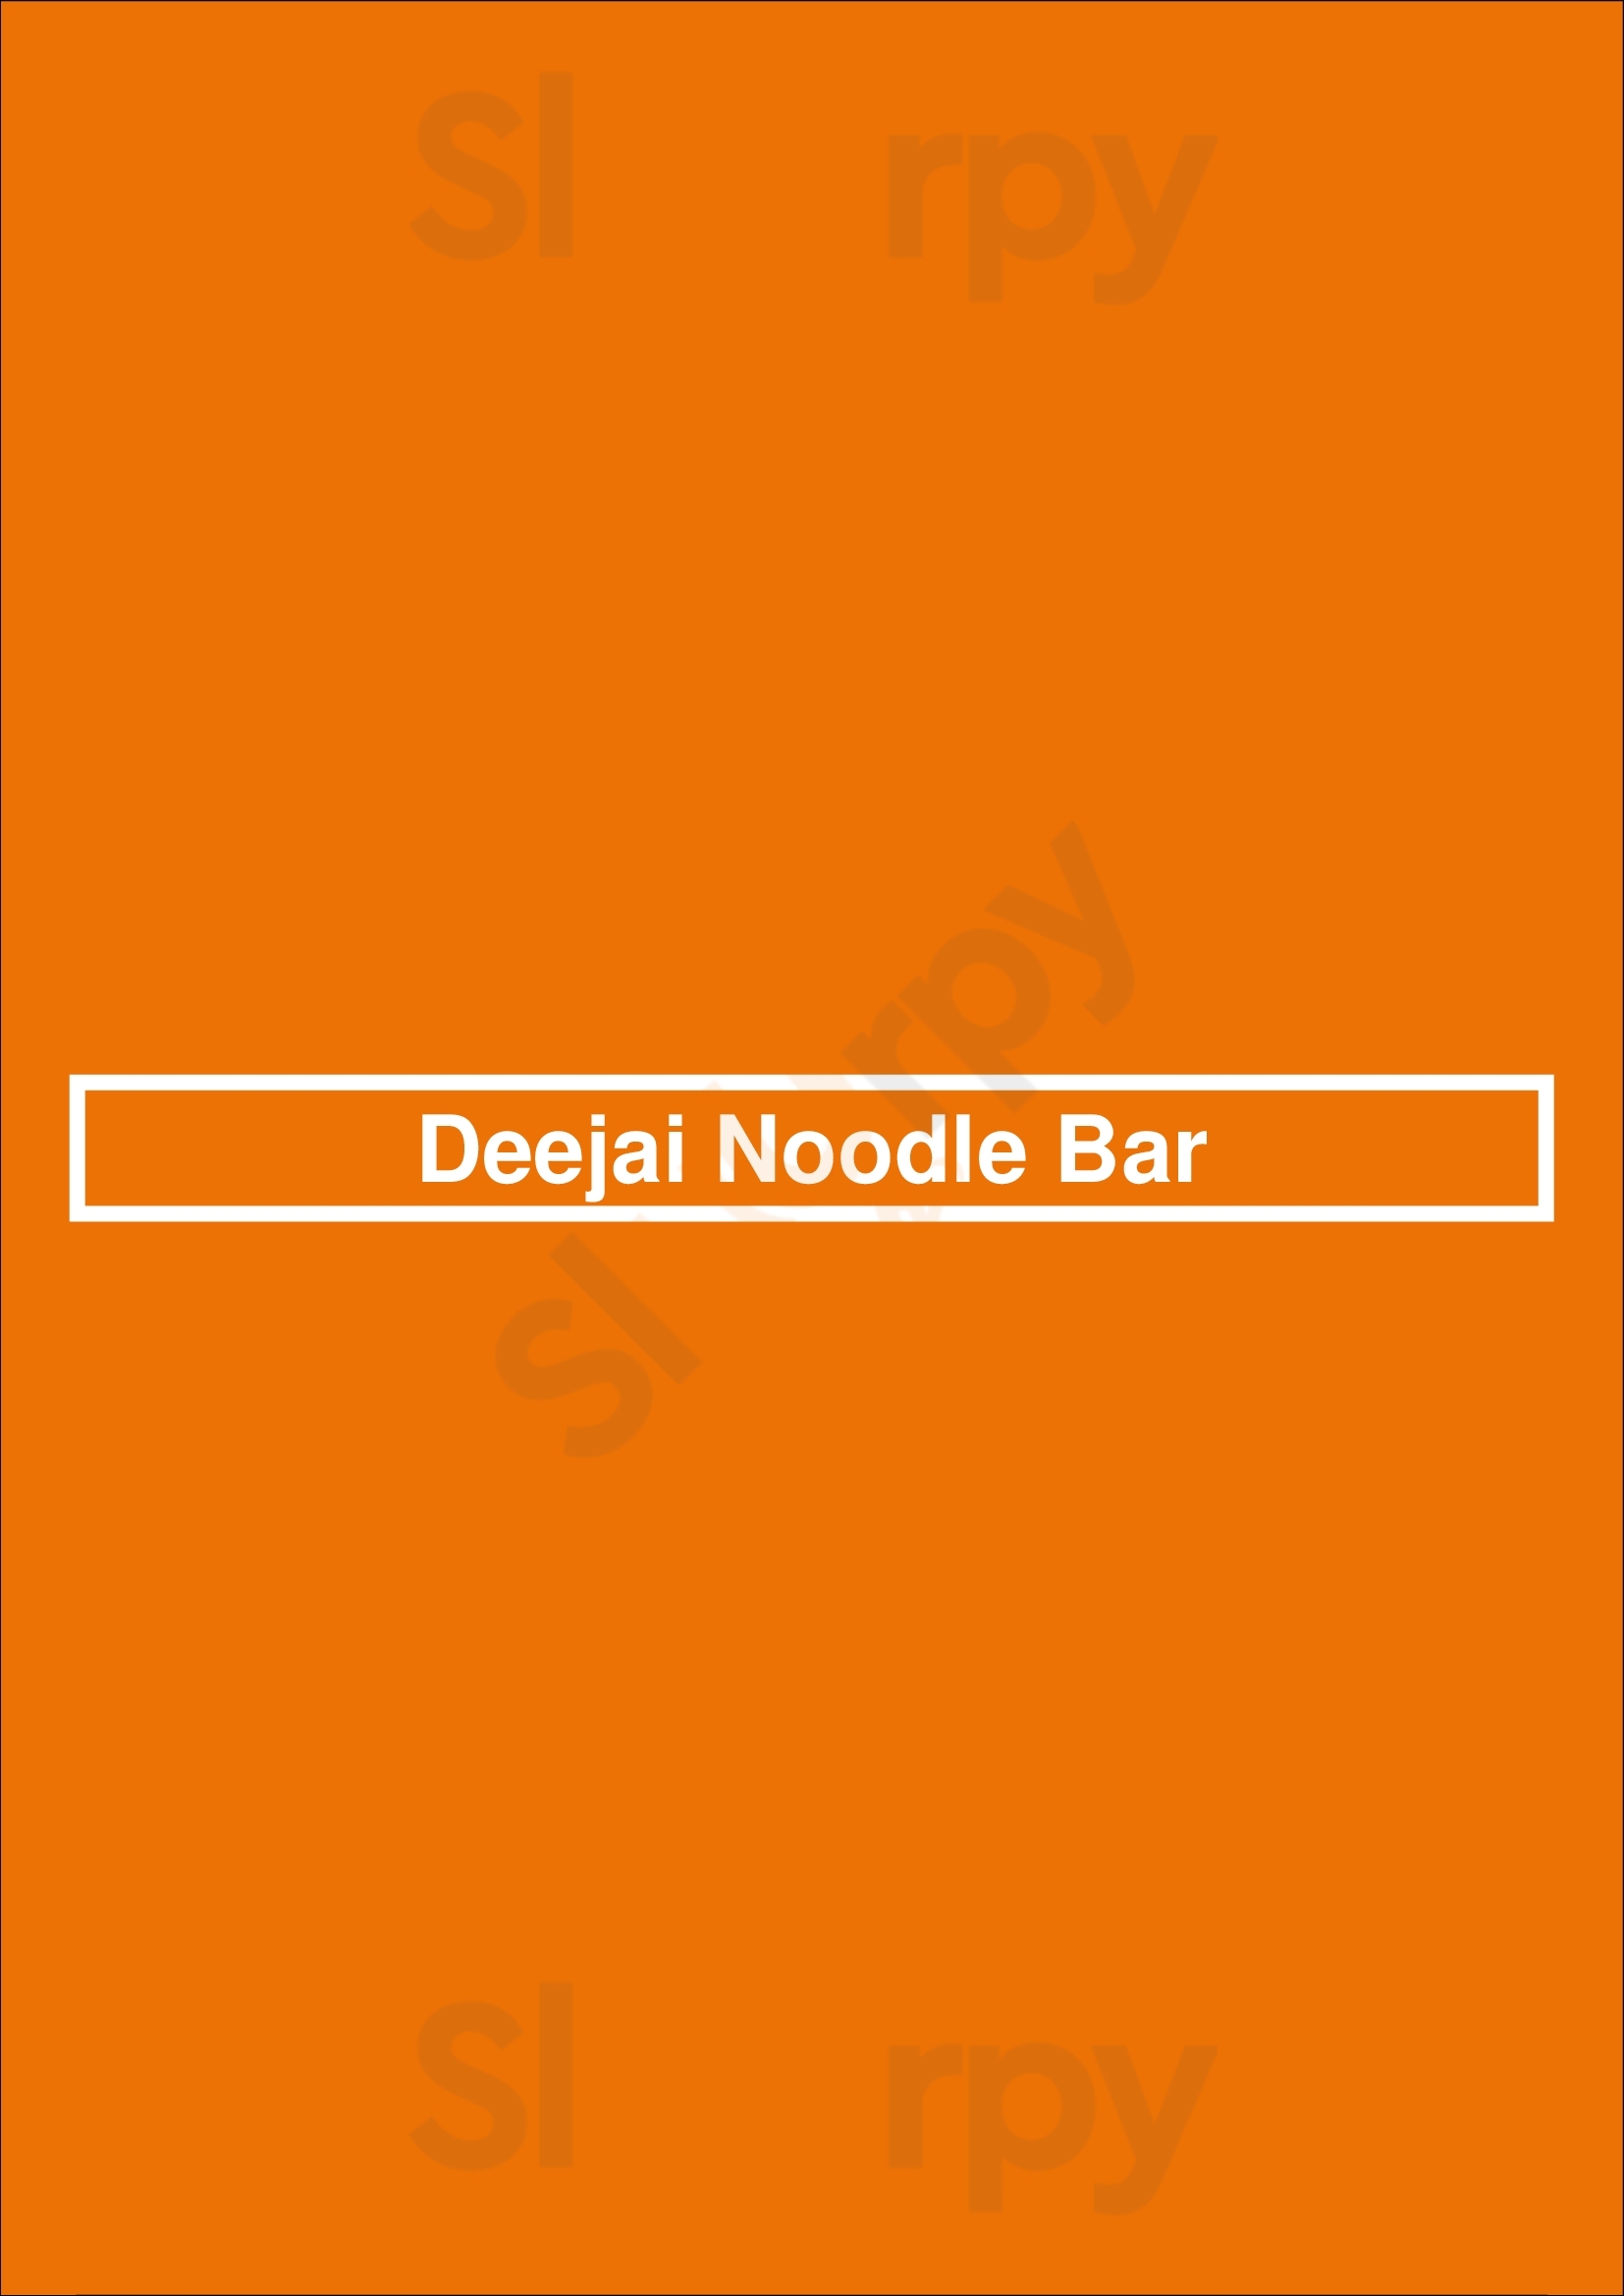 Deejai Noodle Bar Charlotte Menu - 1